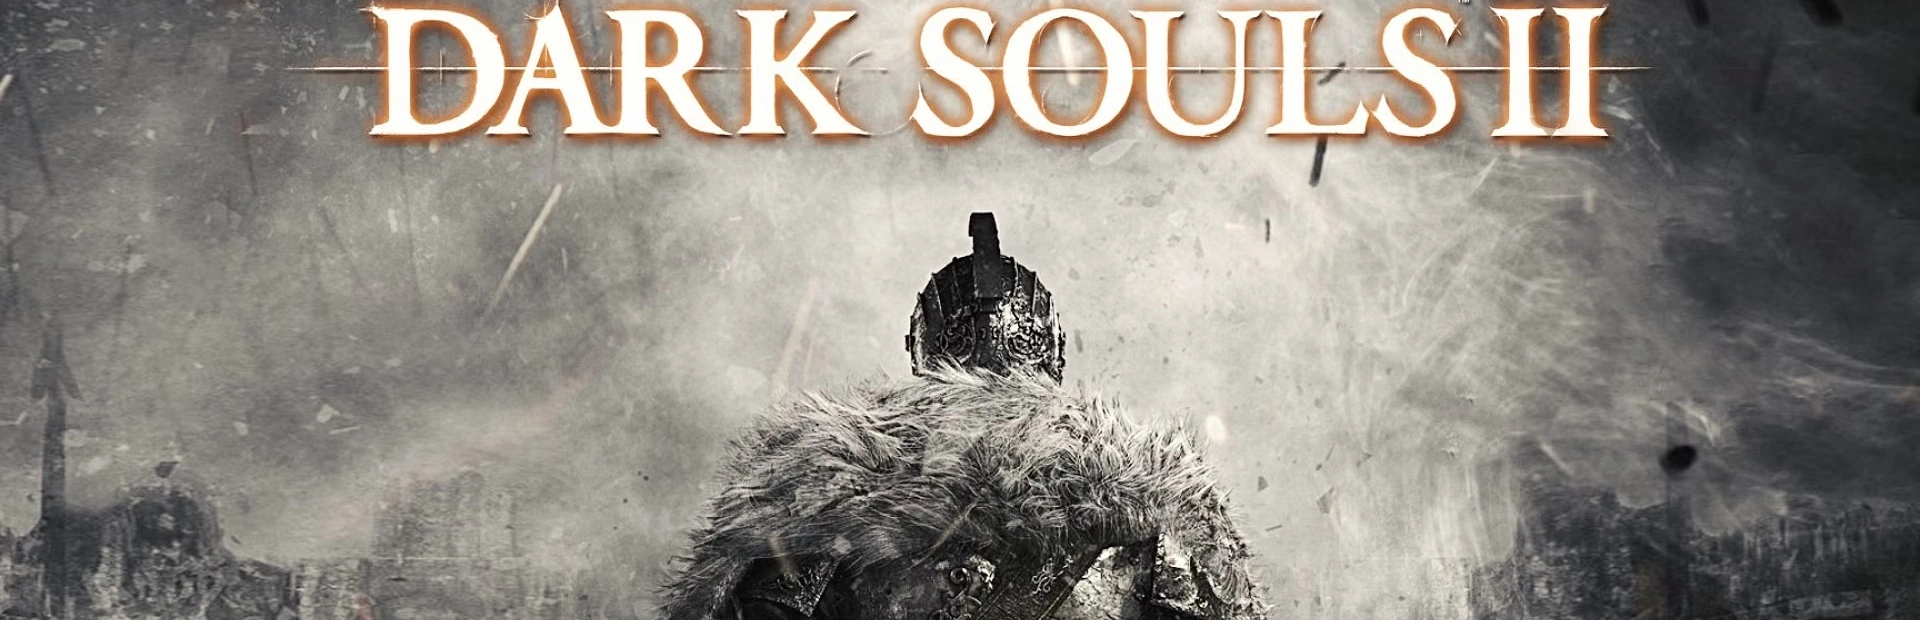 Dark Souls II Scholar of the First Sin.banner2